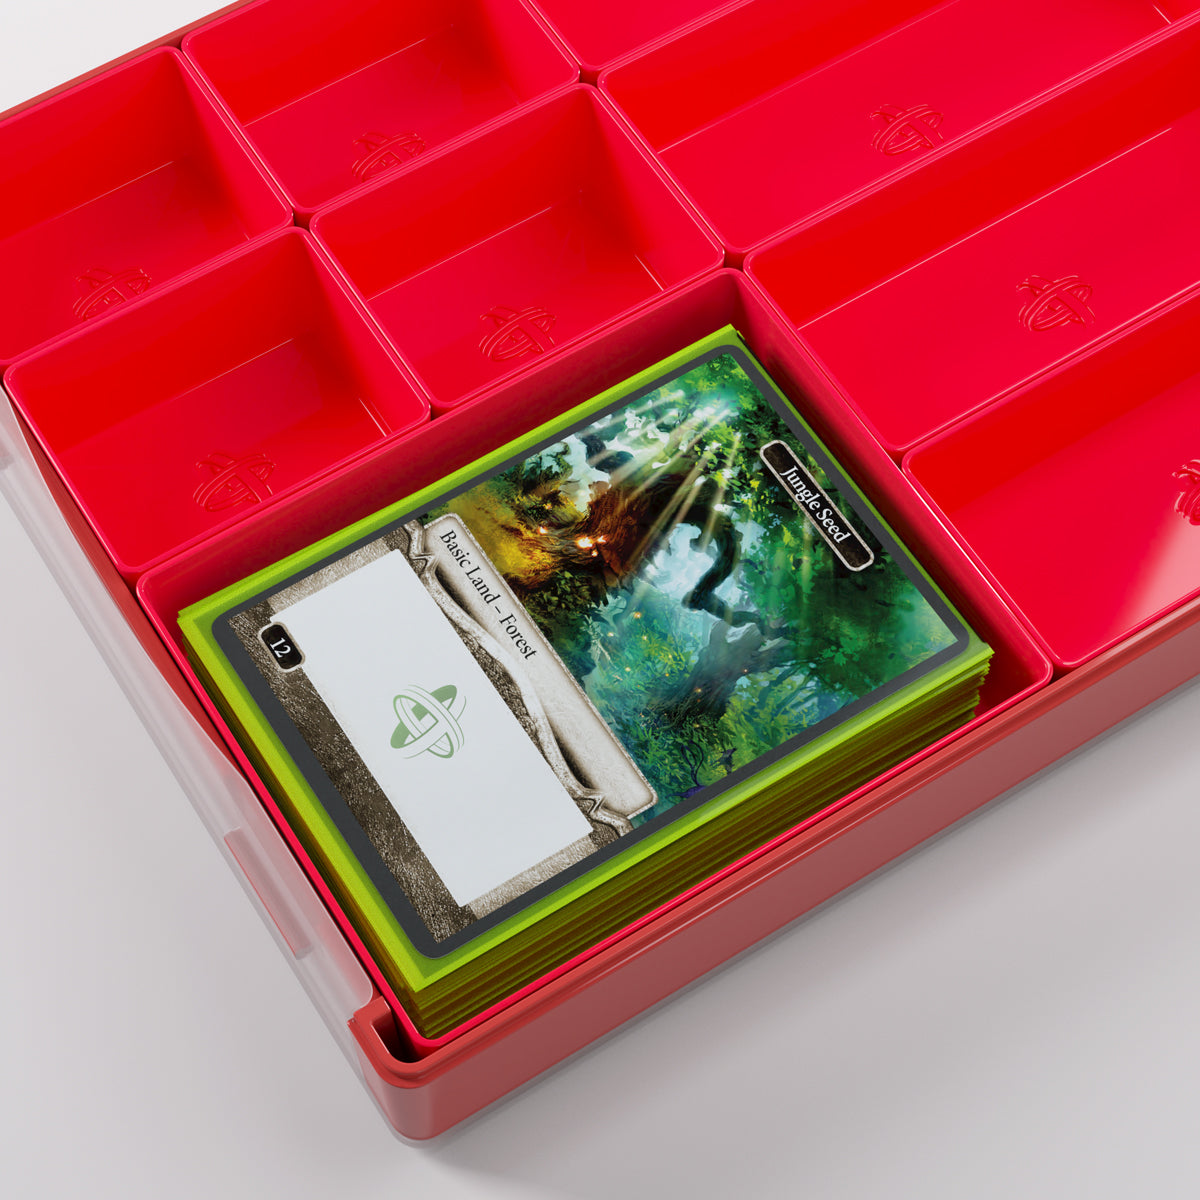 Gamegenic Token Silo Convertible Advanced Storage Box - Red